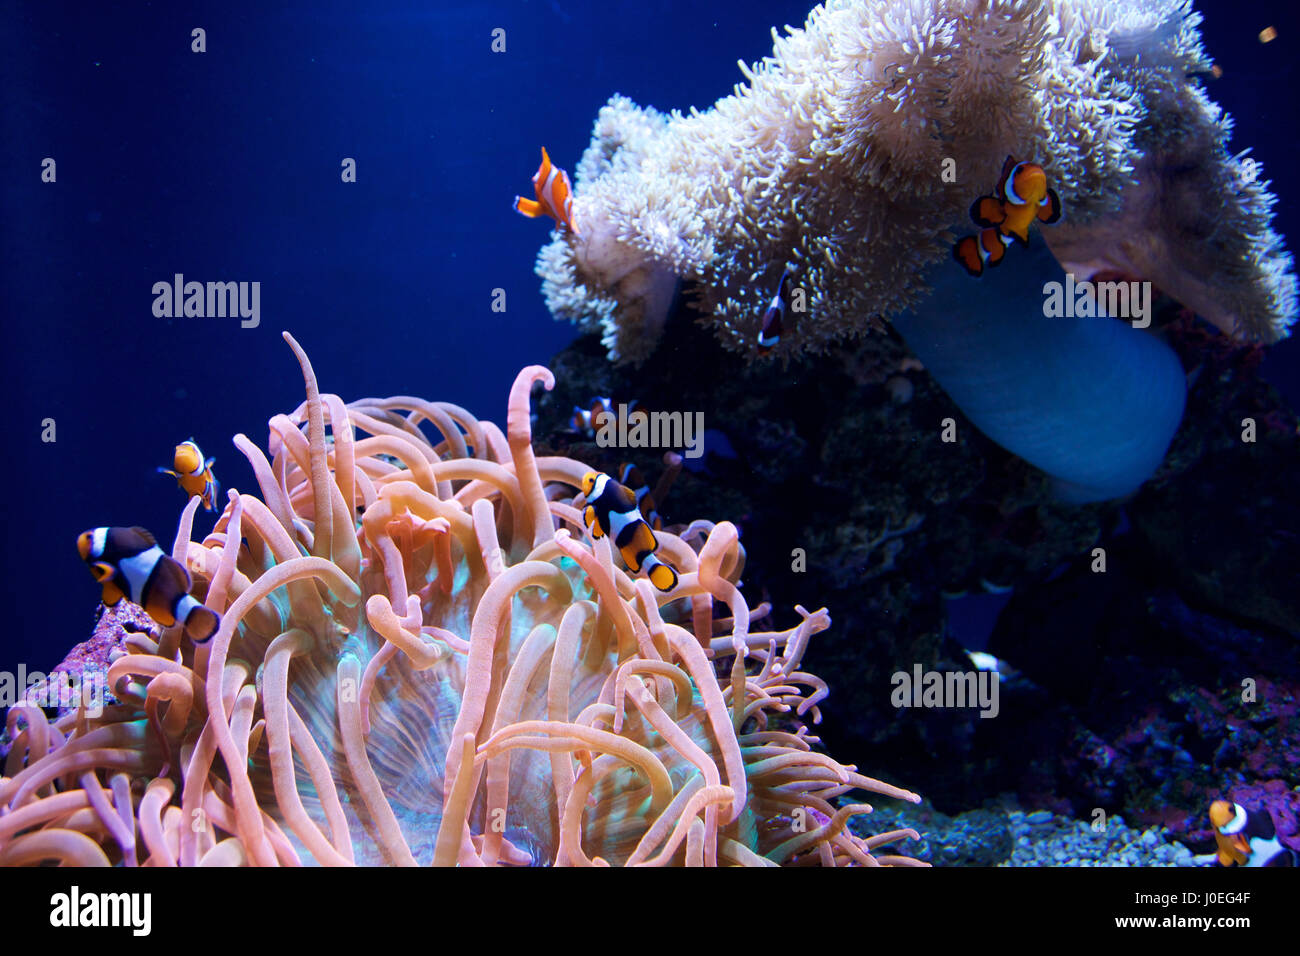 SEATTLE, WASHINGTON, USA - JAN 25th, 2017: Sea anemone and a group of clown fish in marine aquarium on blue background. Stock Photo